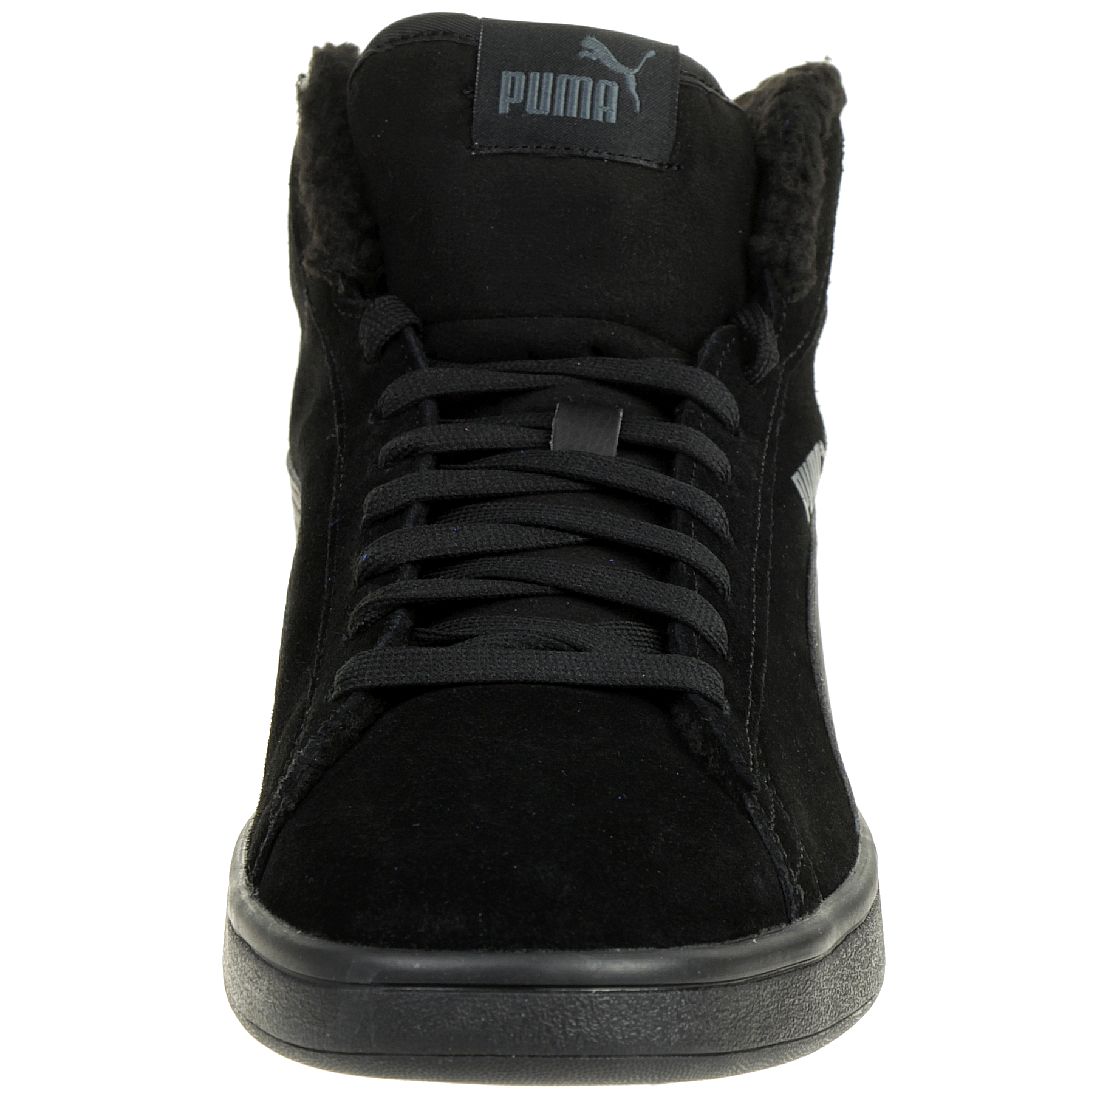 Puma Smash v2 Mid WTR Unisex Sneaker Schuh schwarz gefüttert 366810 01